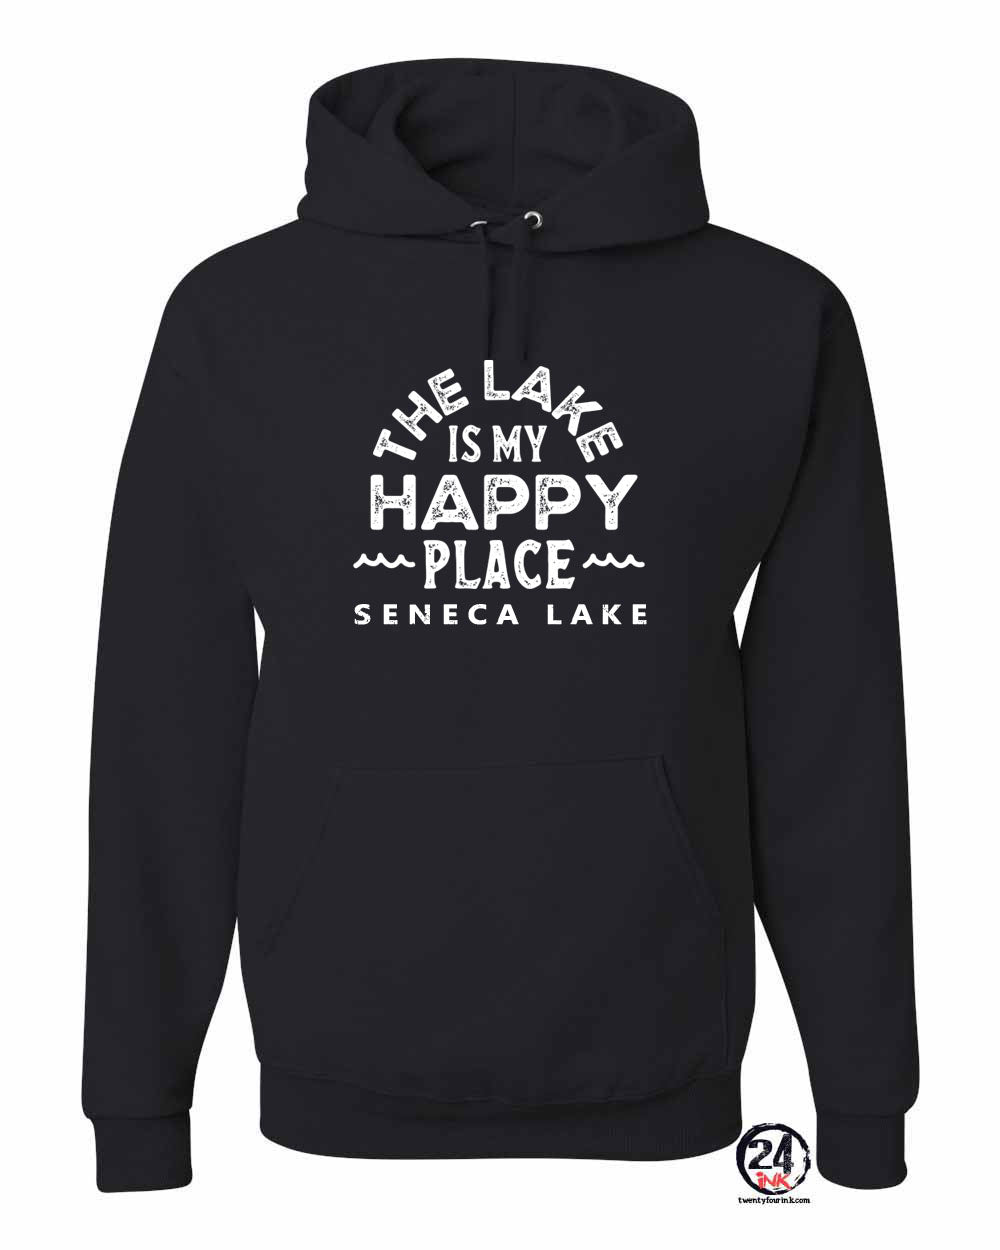 Seneca Lake Design 4 Hooded Sweatshirt